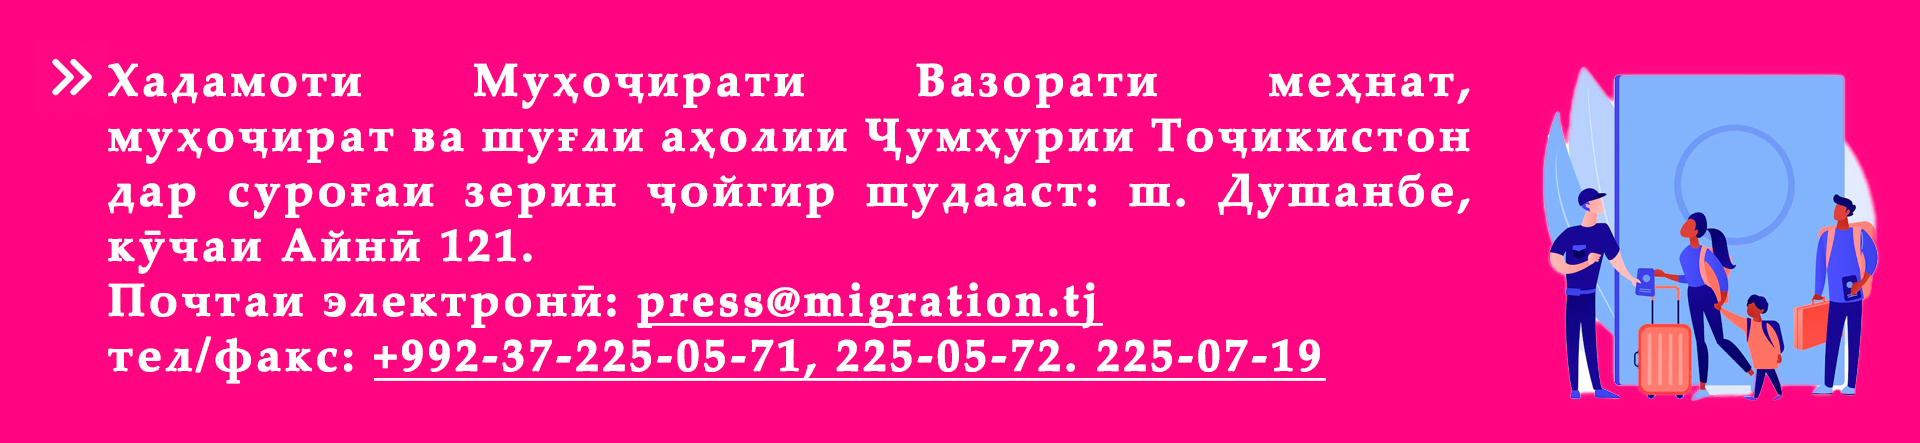 migration service